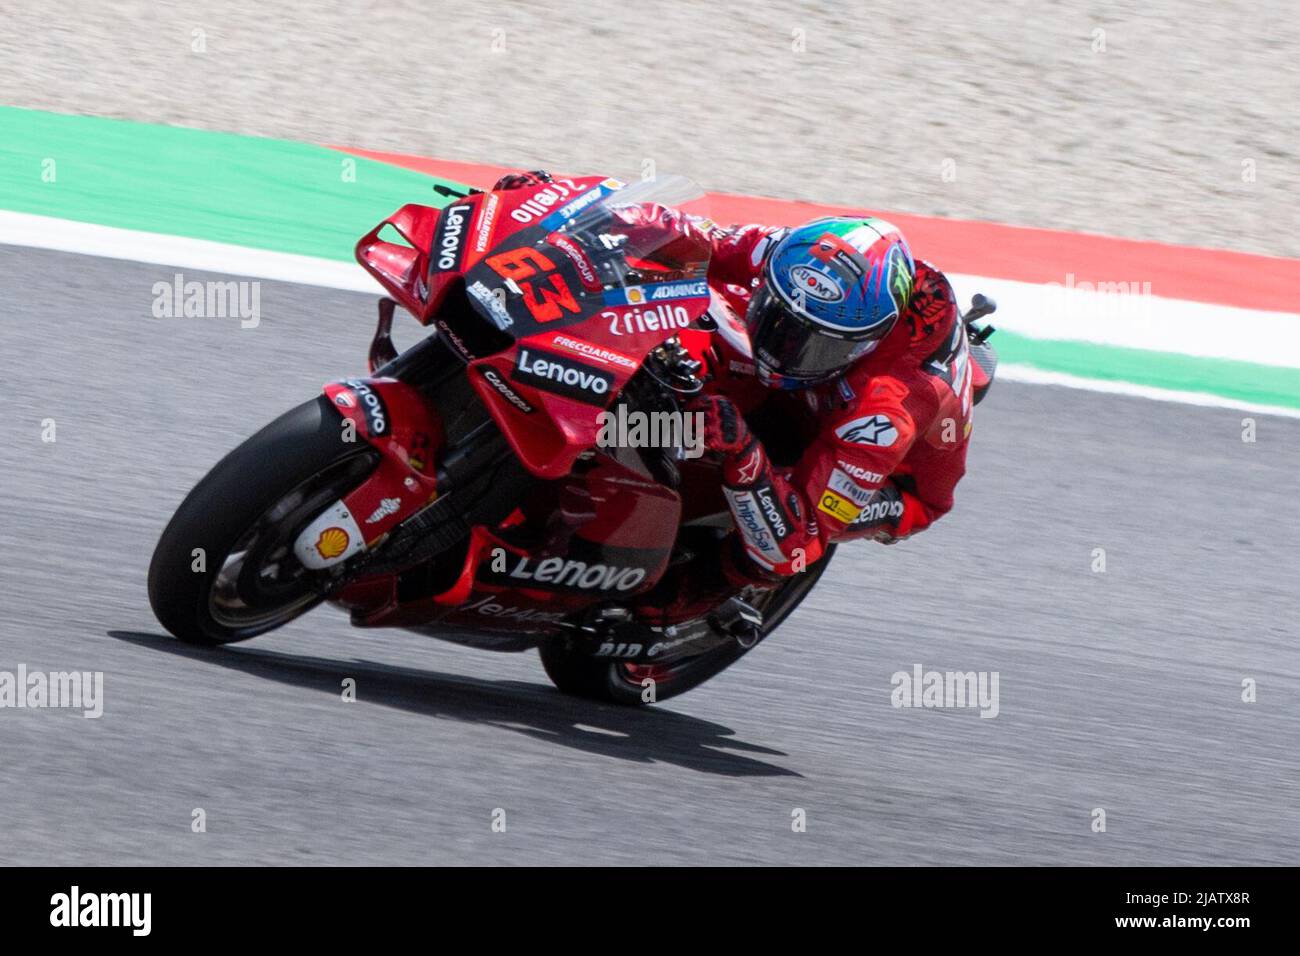 Mgello Circuit, scaperia, Italy. 29th May, 2022 Motogp Grand Prix Of Italy Francesco Bagnaia/Ducati Lenovo Team in action Stock Photo